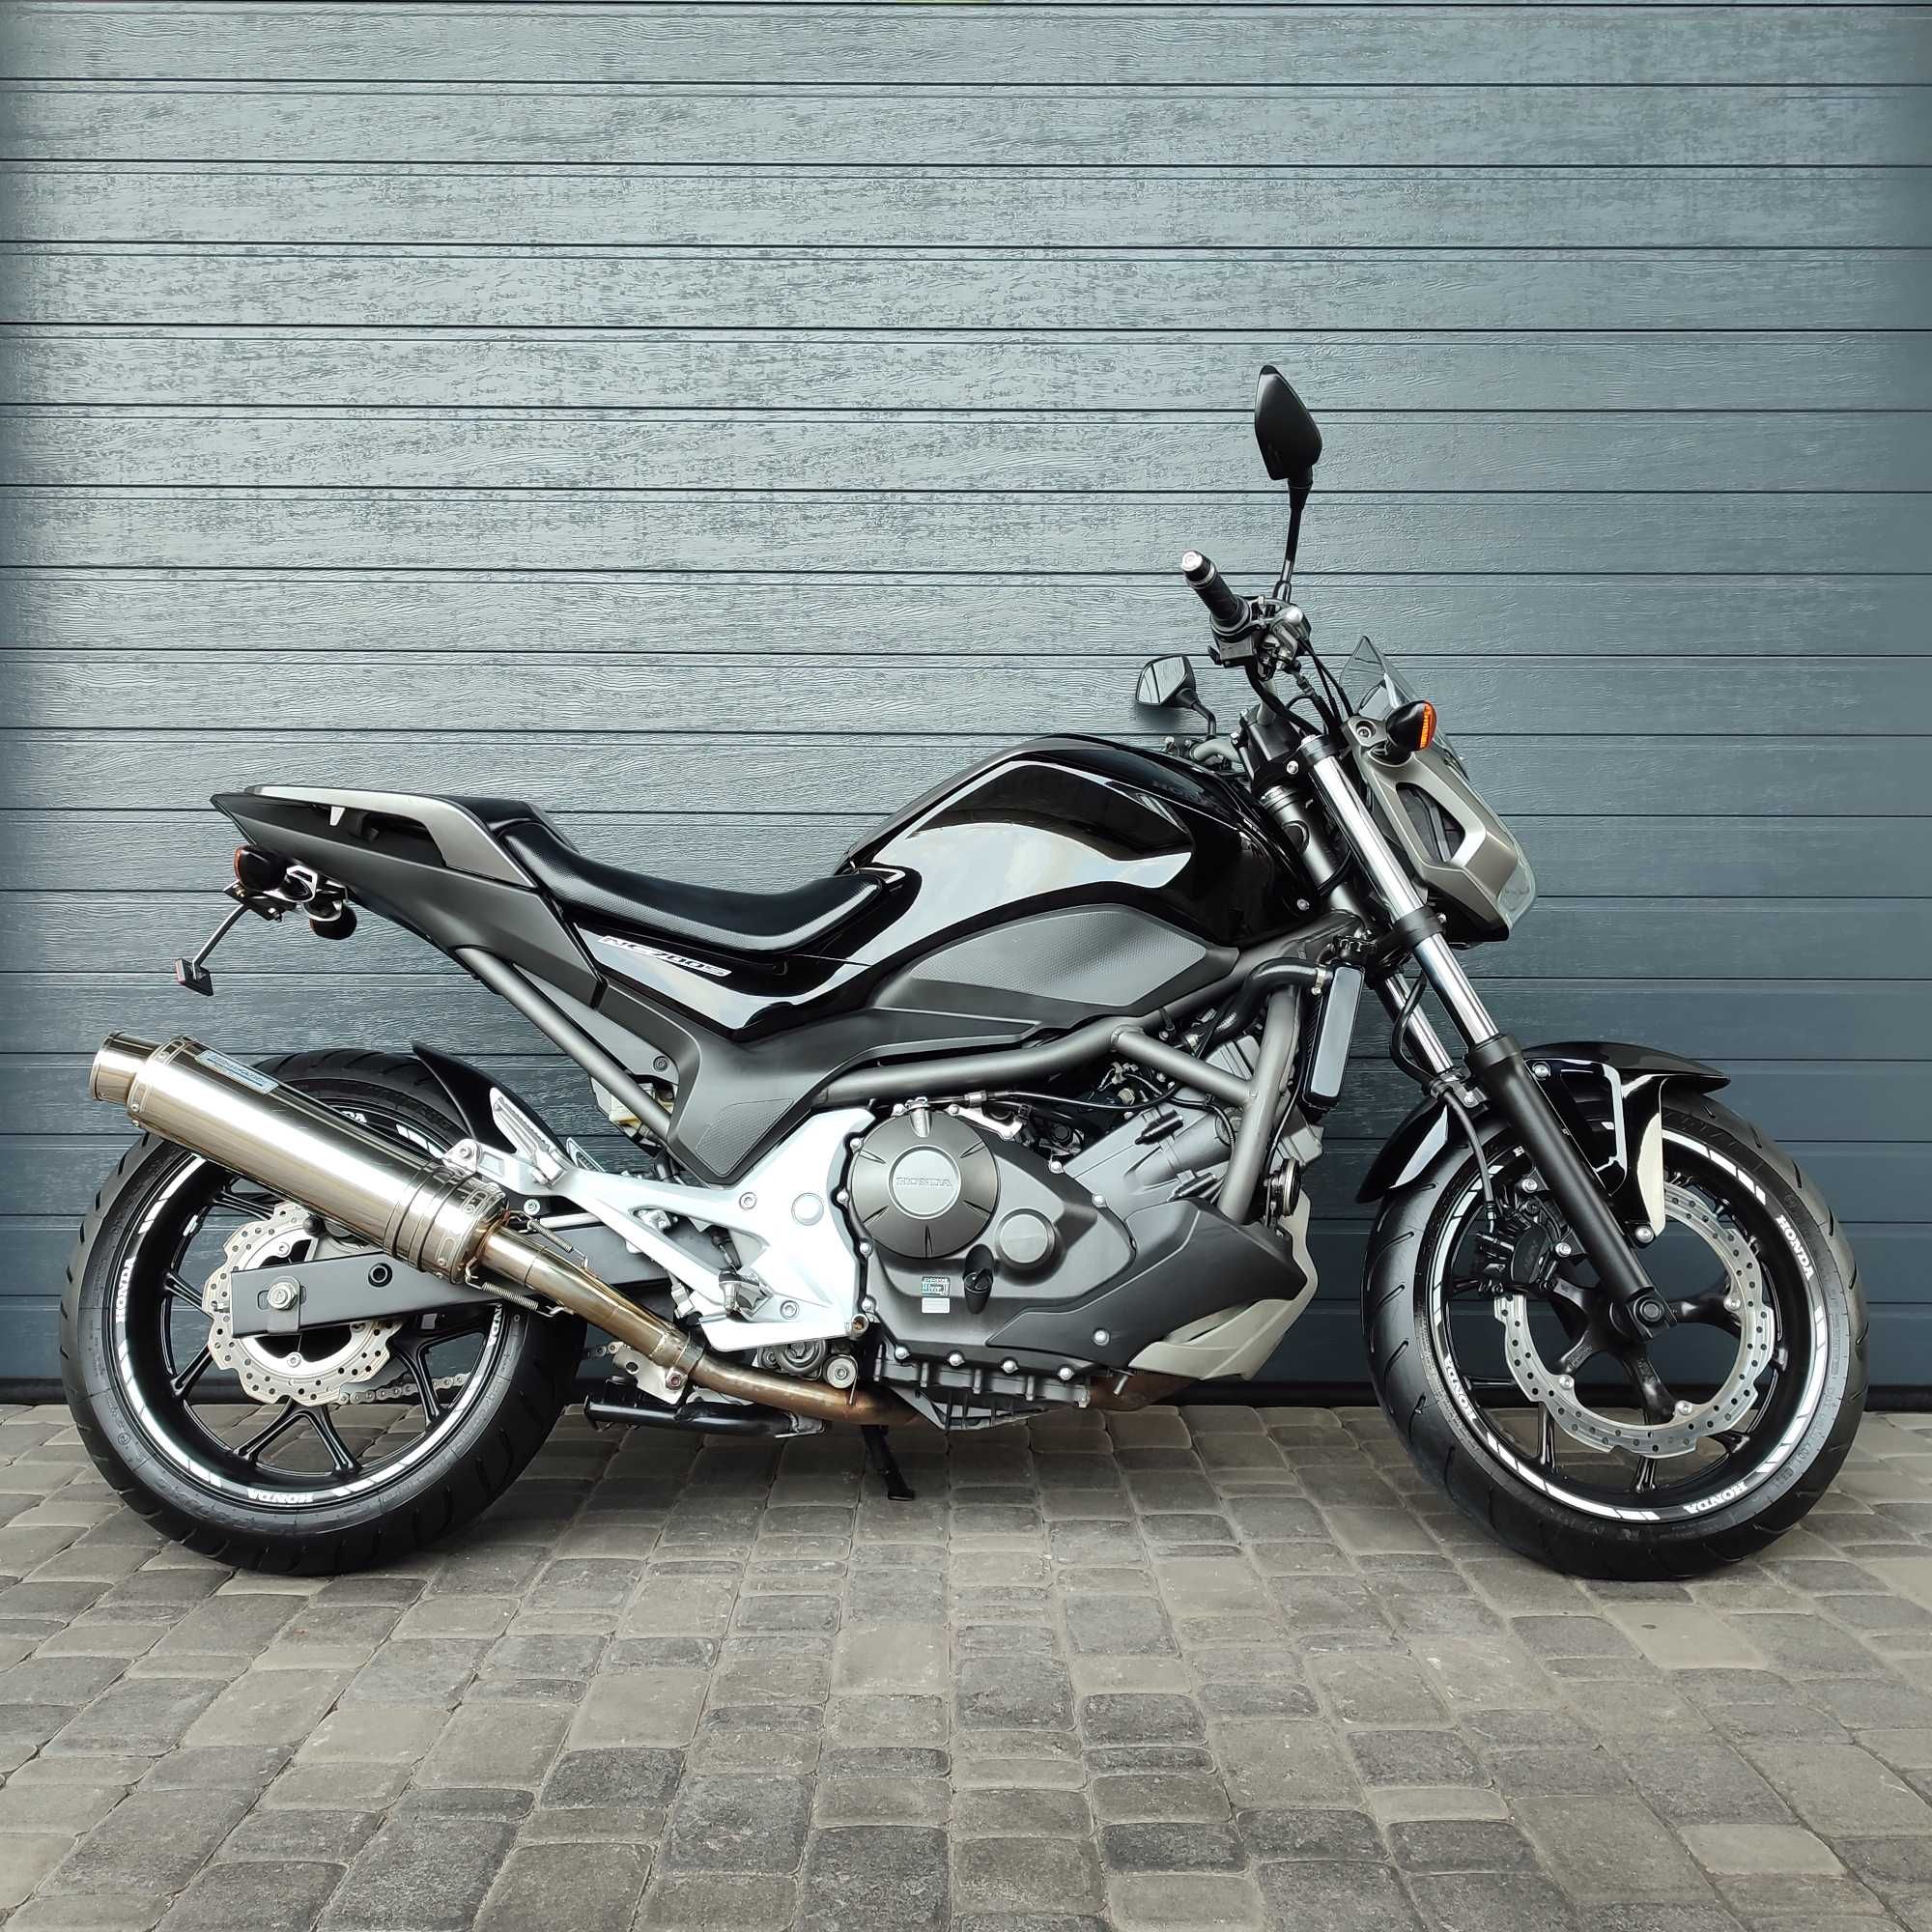 Продам мотоцикл Honda NC700S (0691)